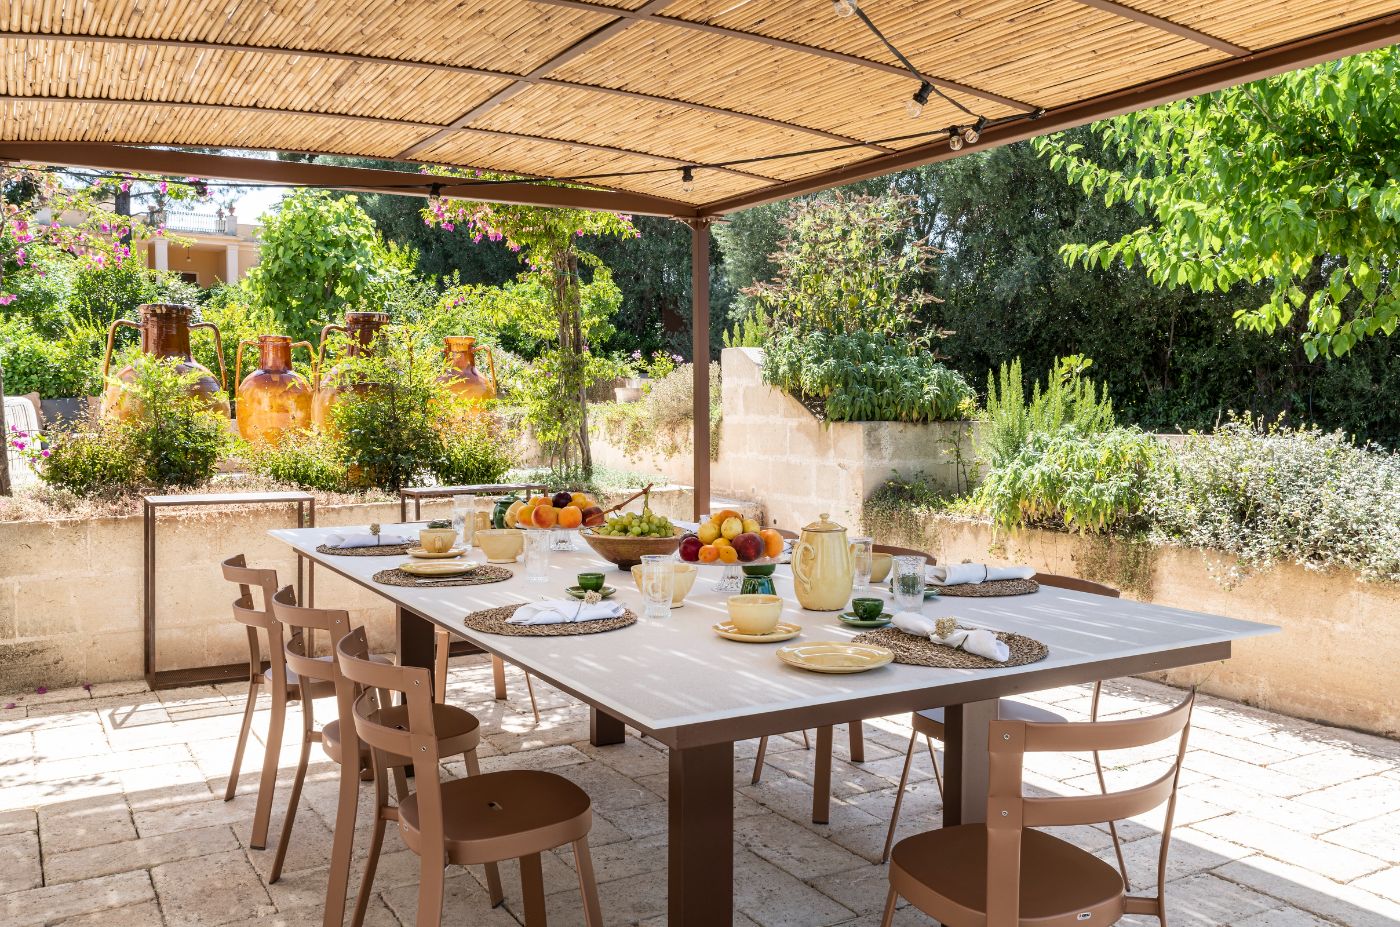 The outdoor dining area at Villa Alberi.